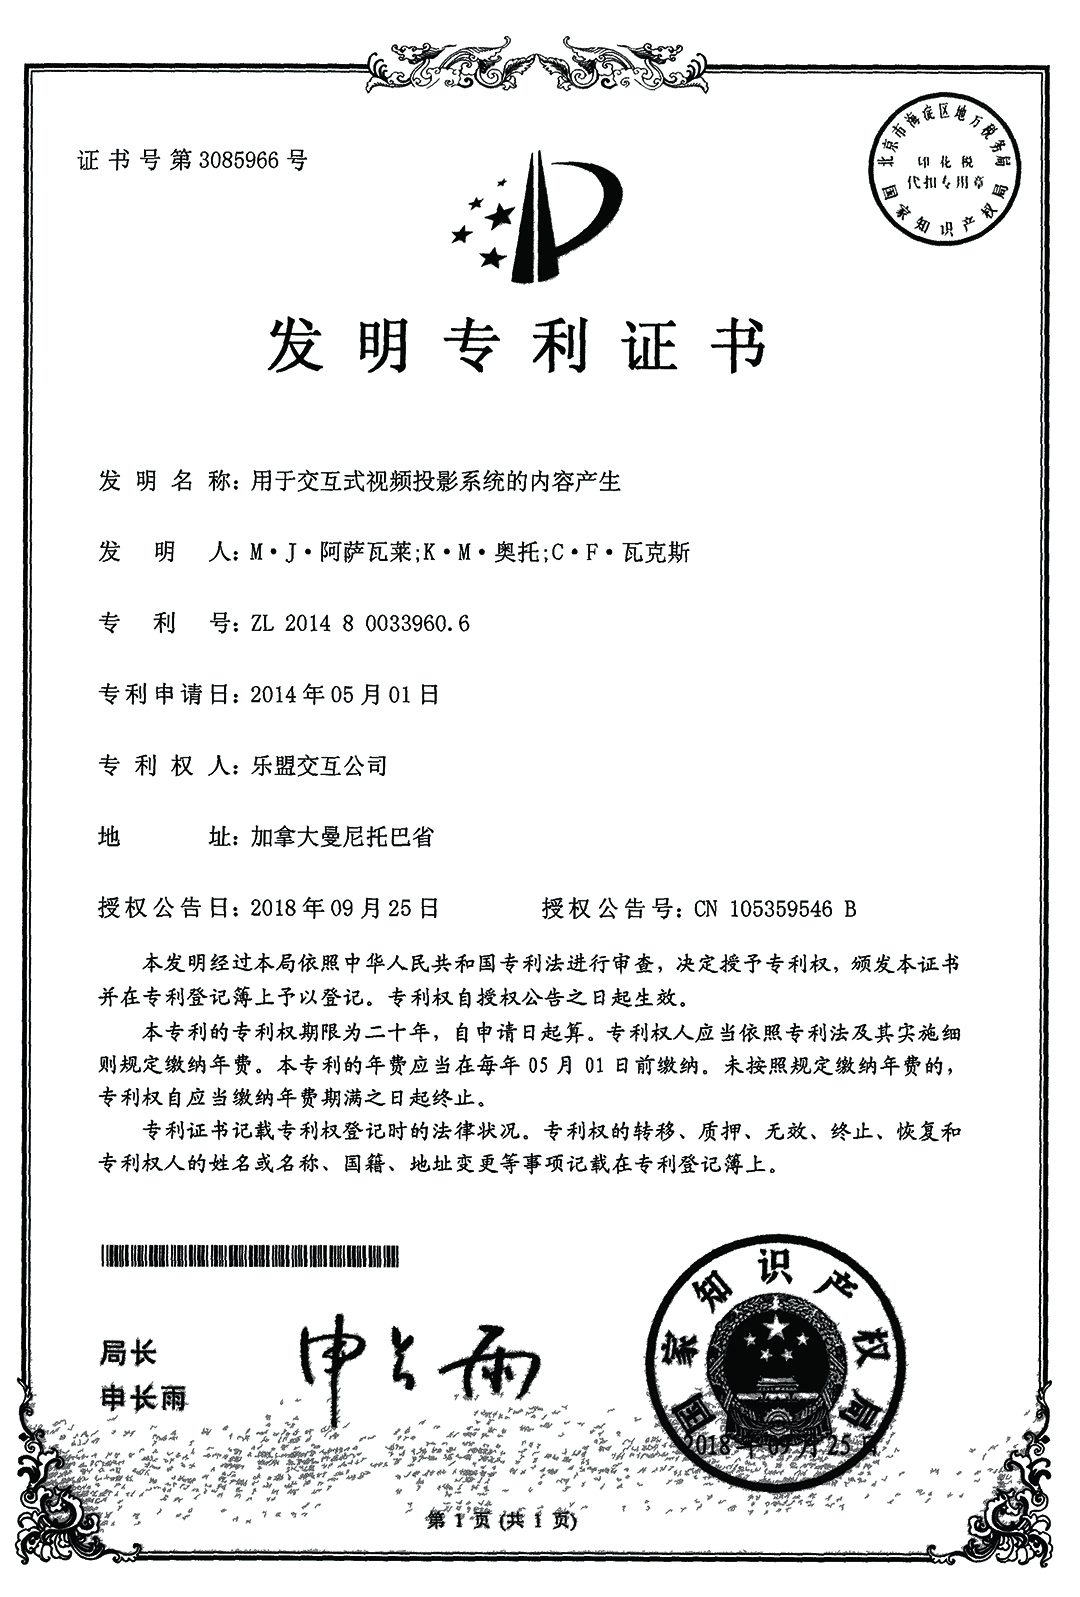 China_Patent_Photo_Websized.jpg